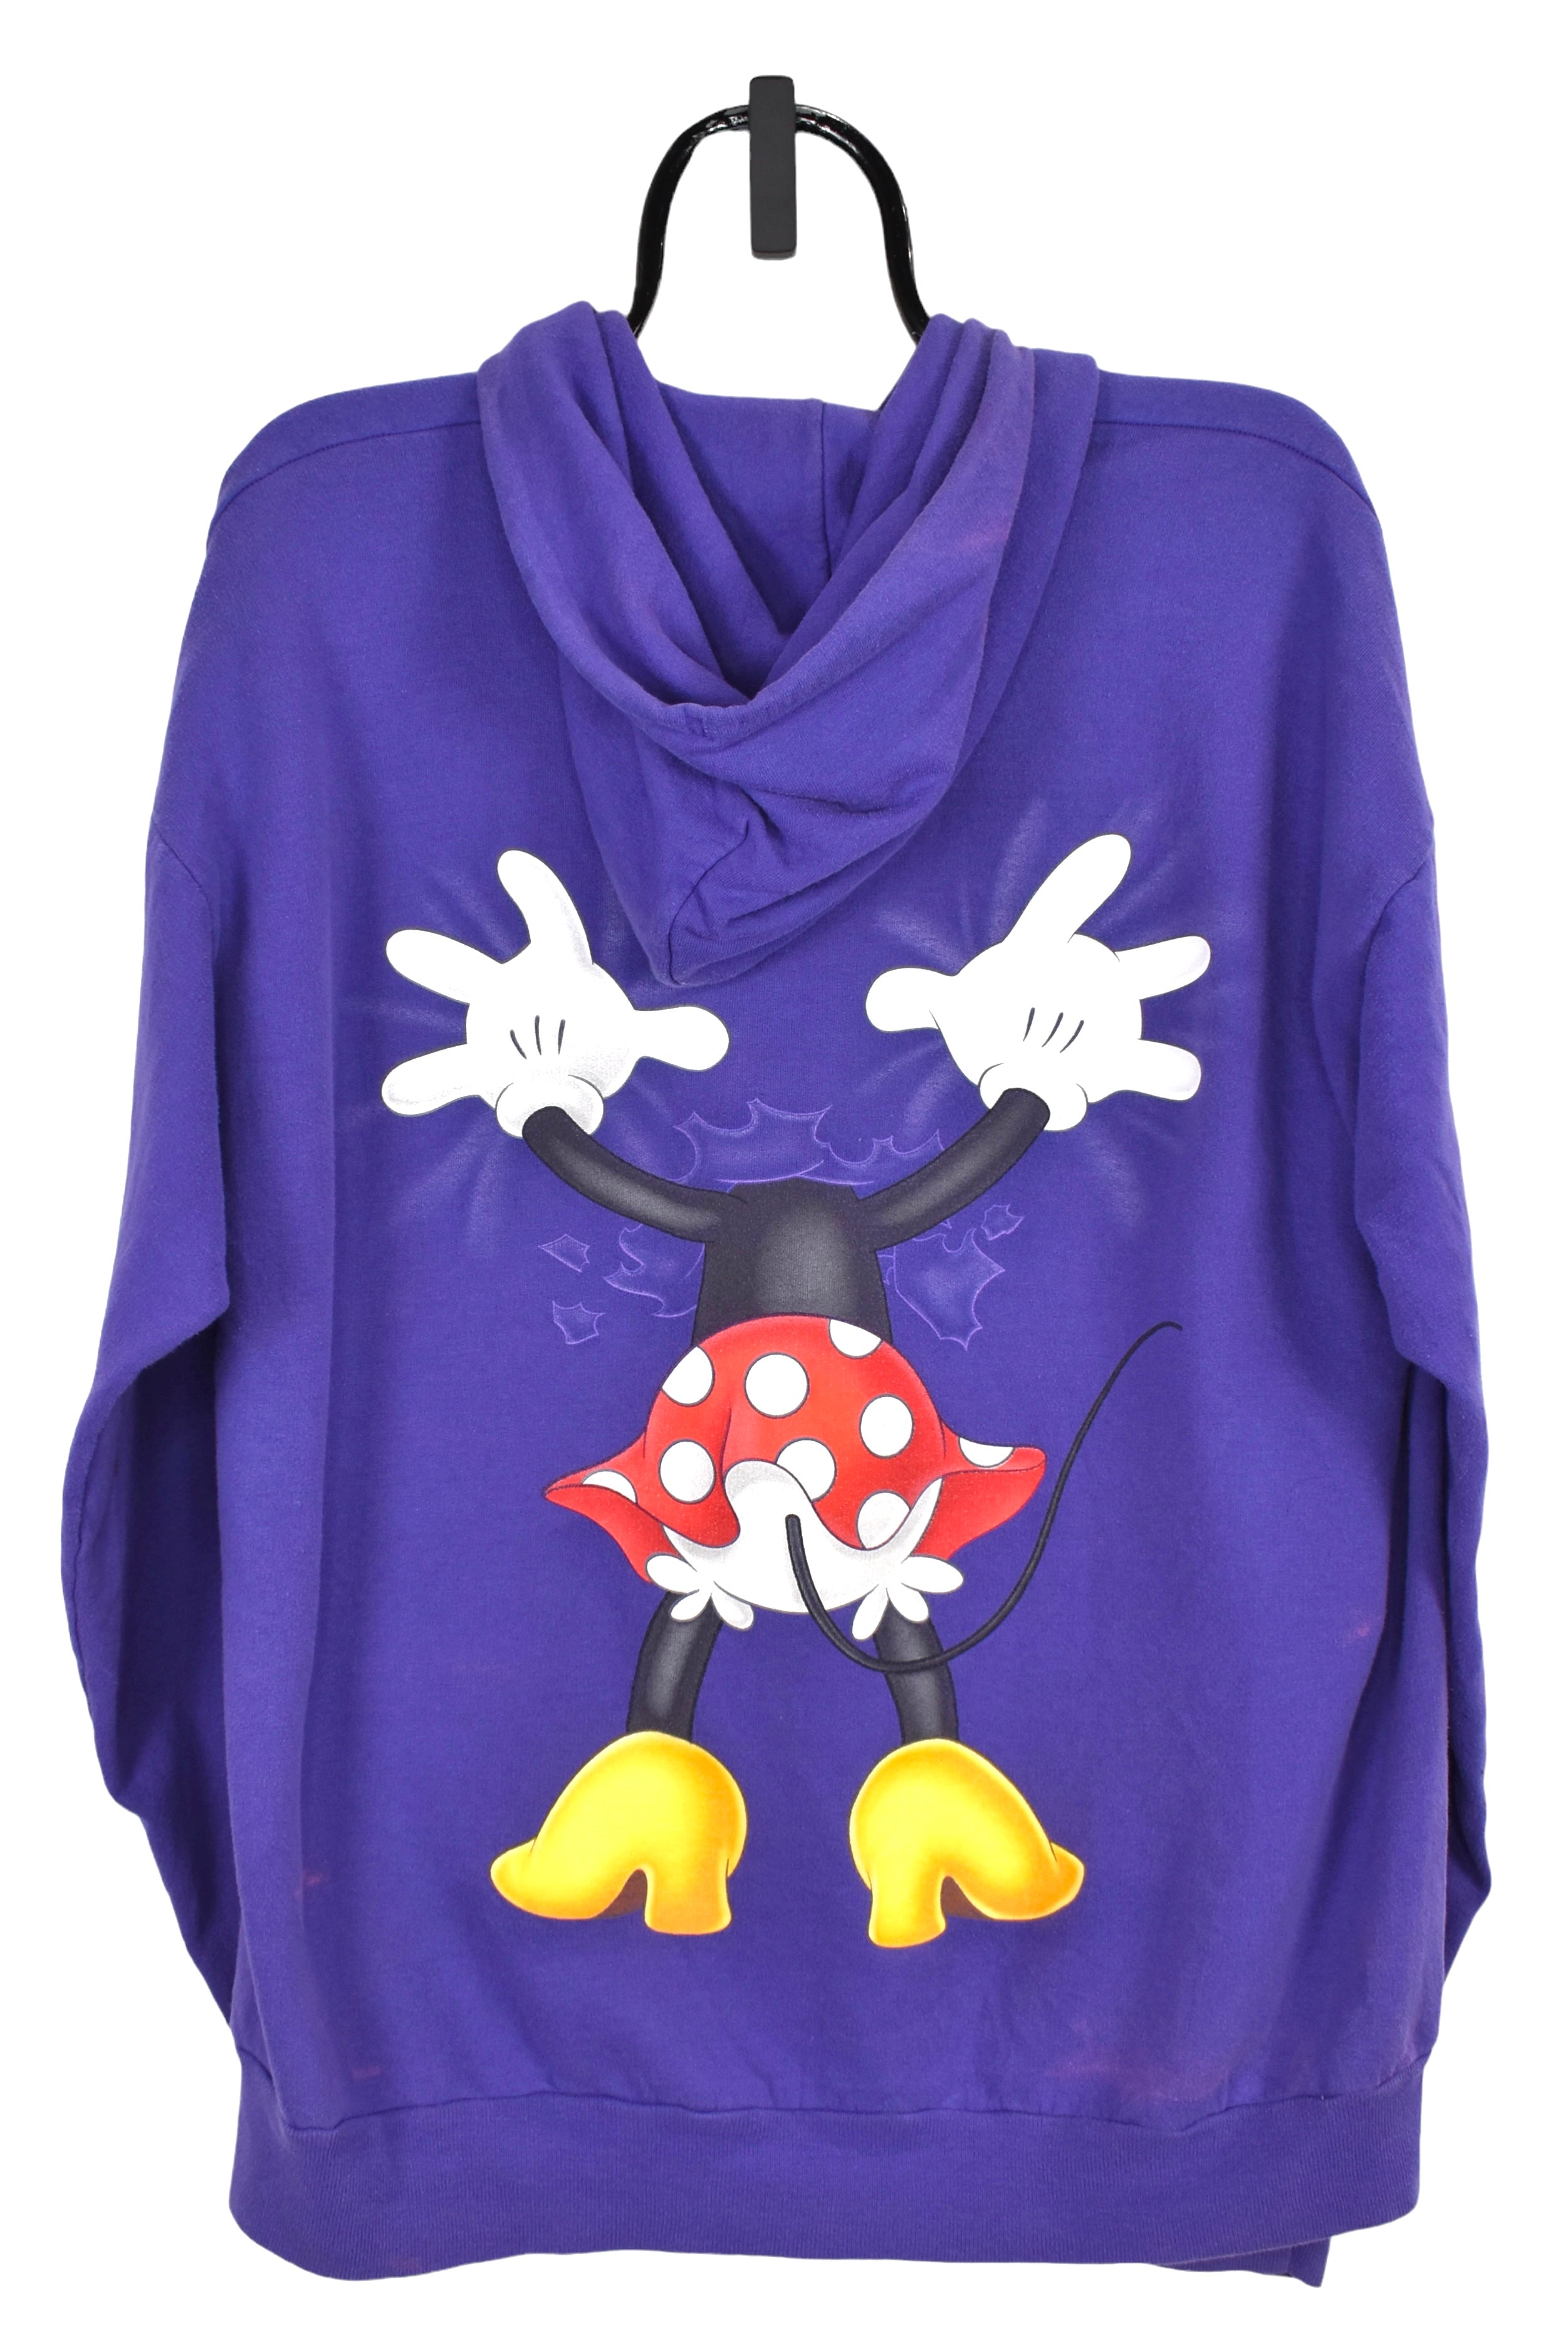 Vintage Minnie Mouse hoodie (XL), purple Disney graphic sweatshirt